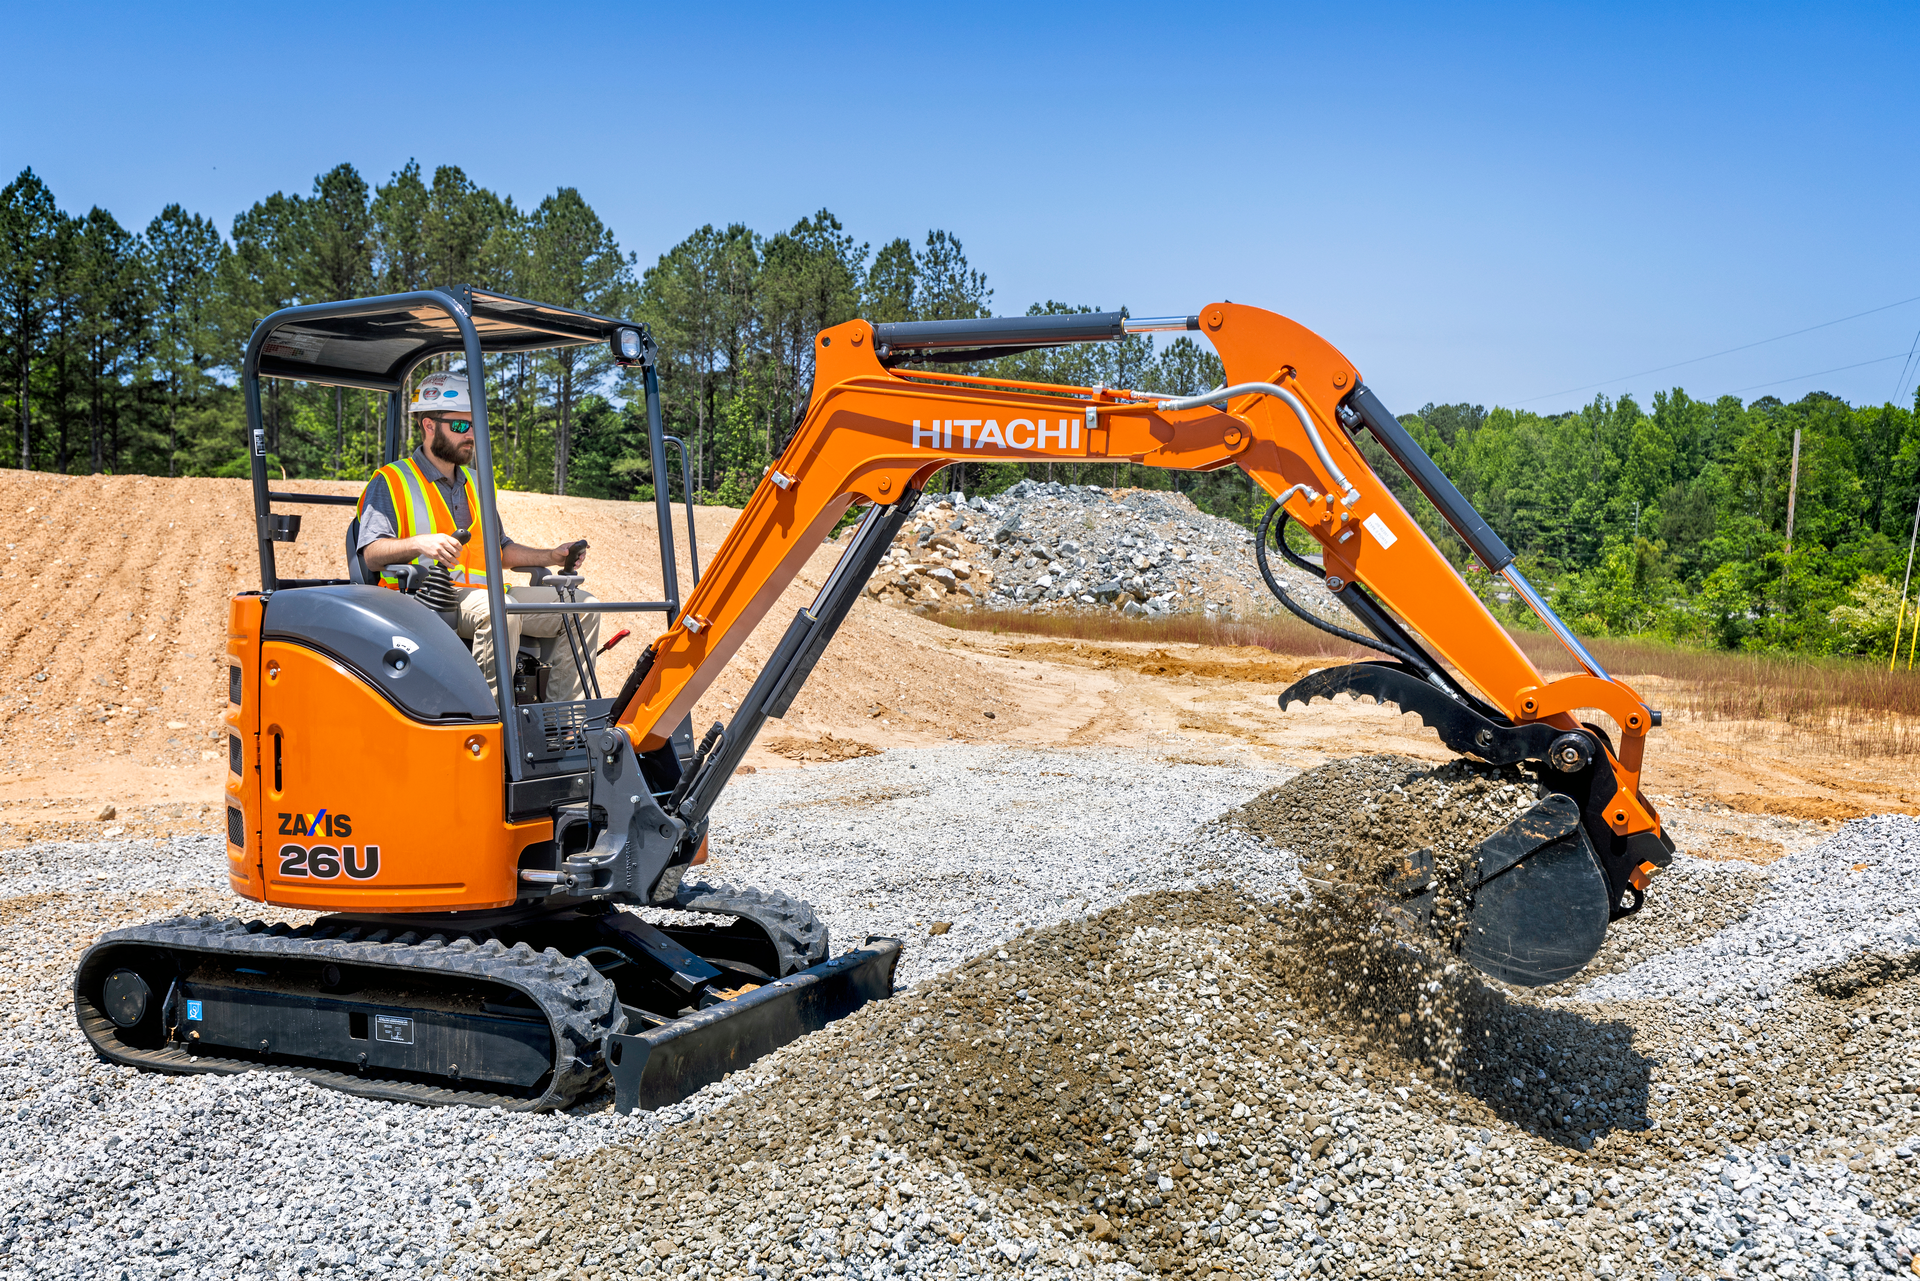 Hitachi ZXUN Excavator   Construction Equipment